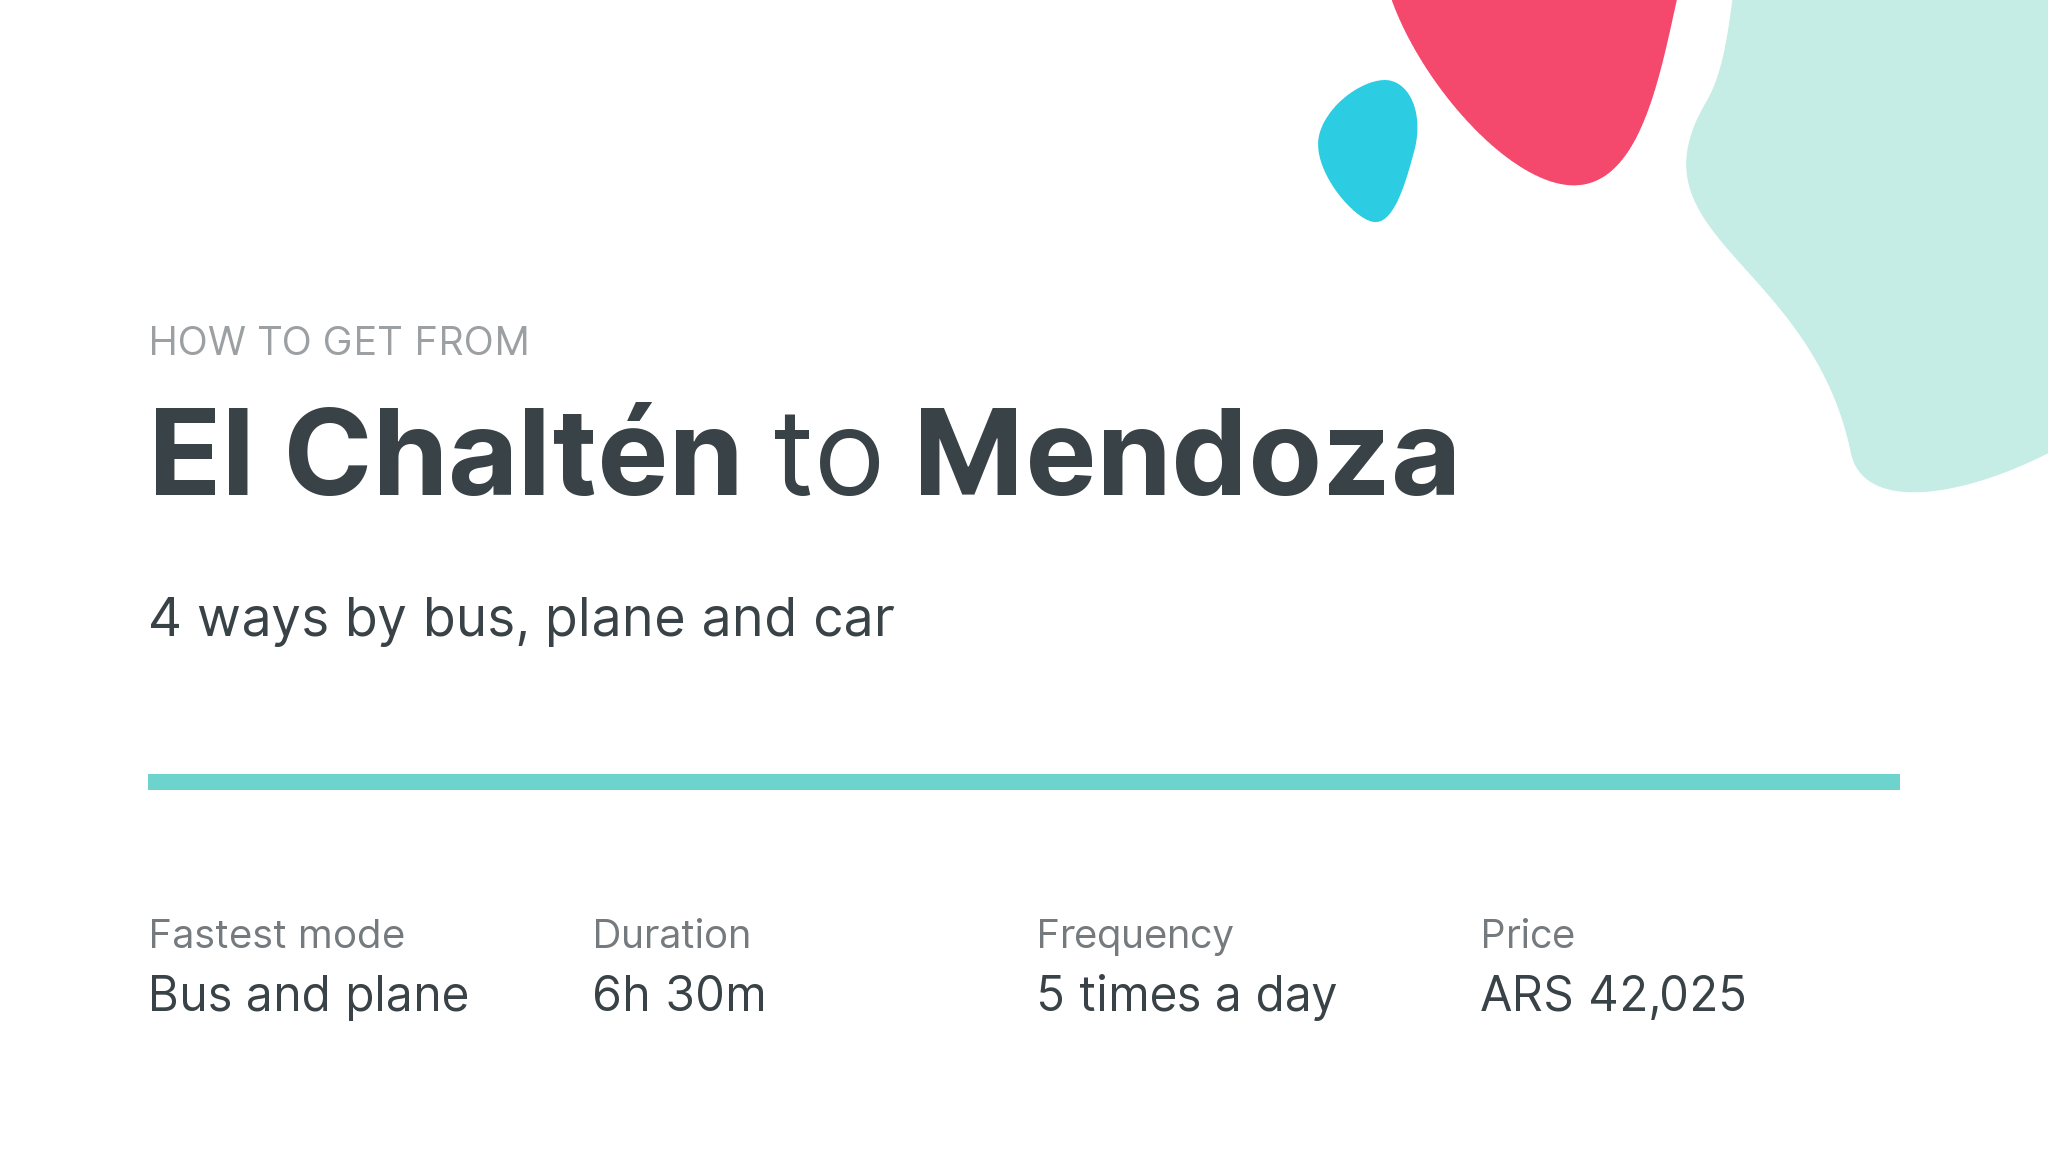 How do I get from El Chaltén to Mendoza